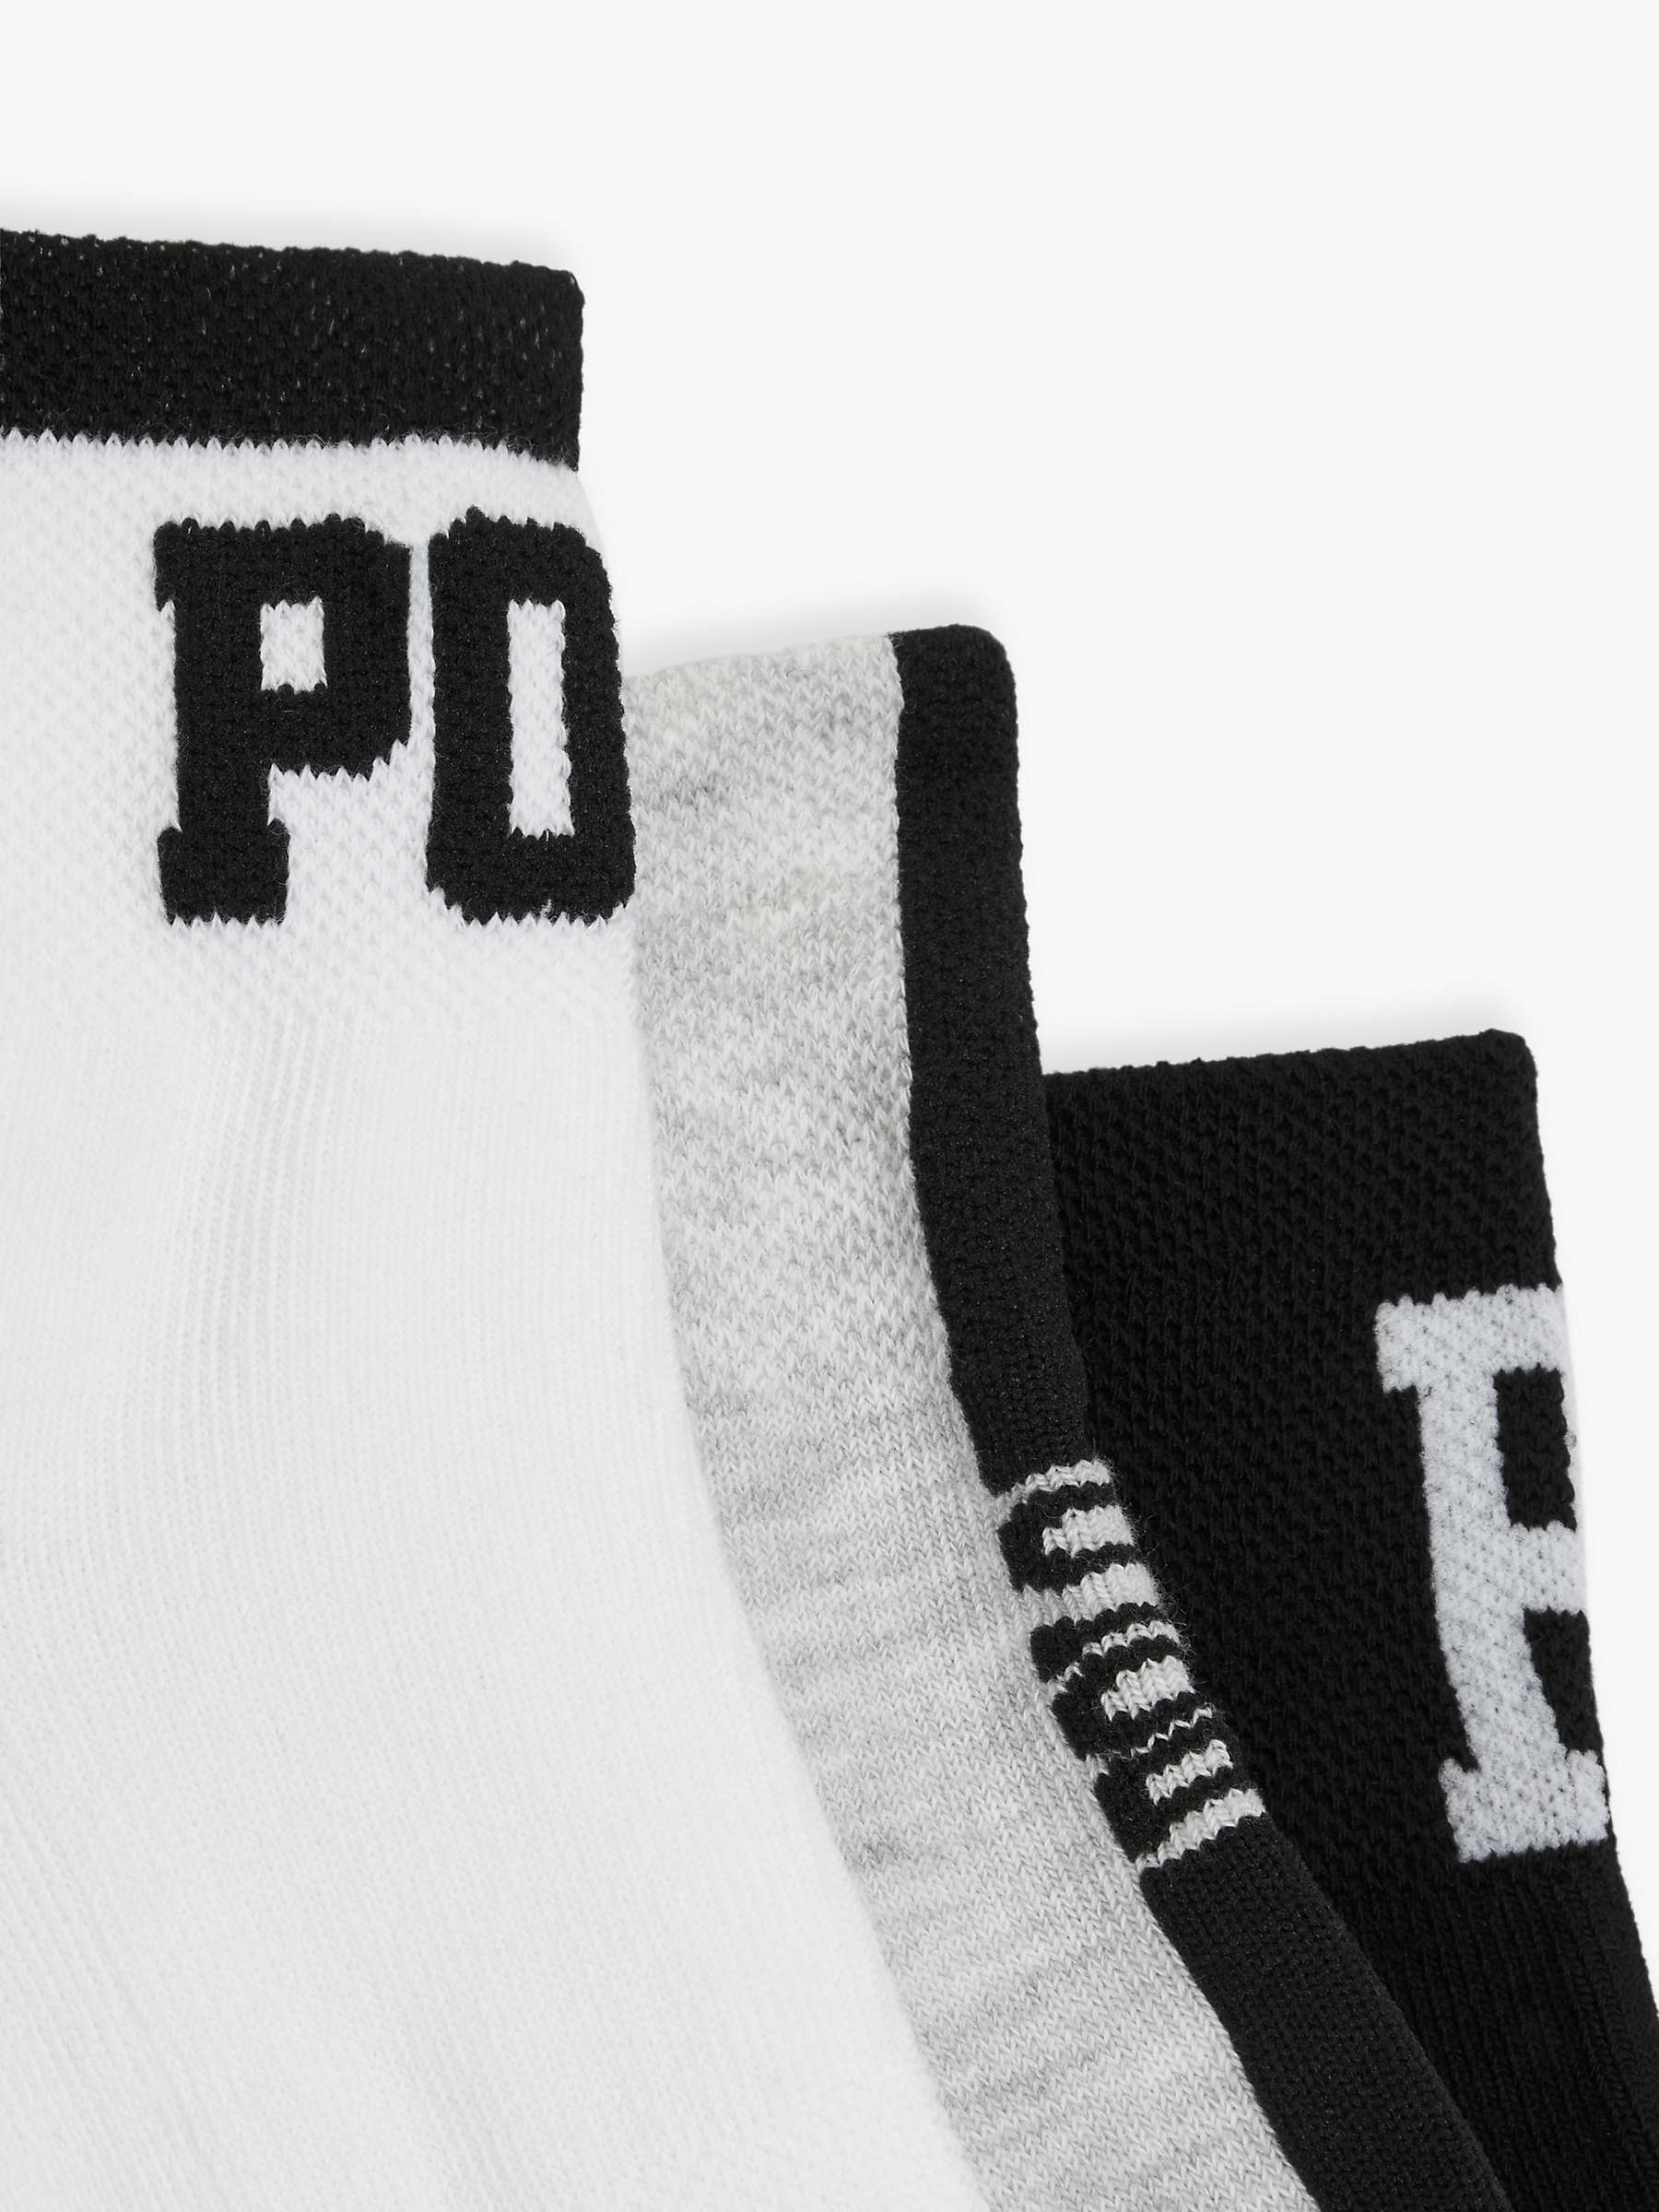 Buy Ralph Lauren Ankle Socks, Pack of 3, Grey/Multi Online at johnlewis.com